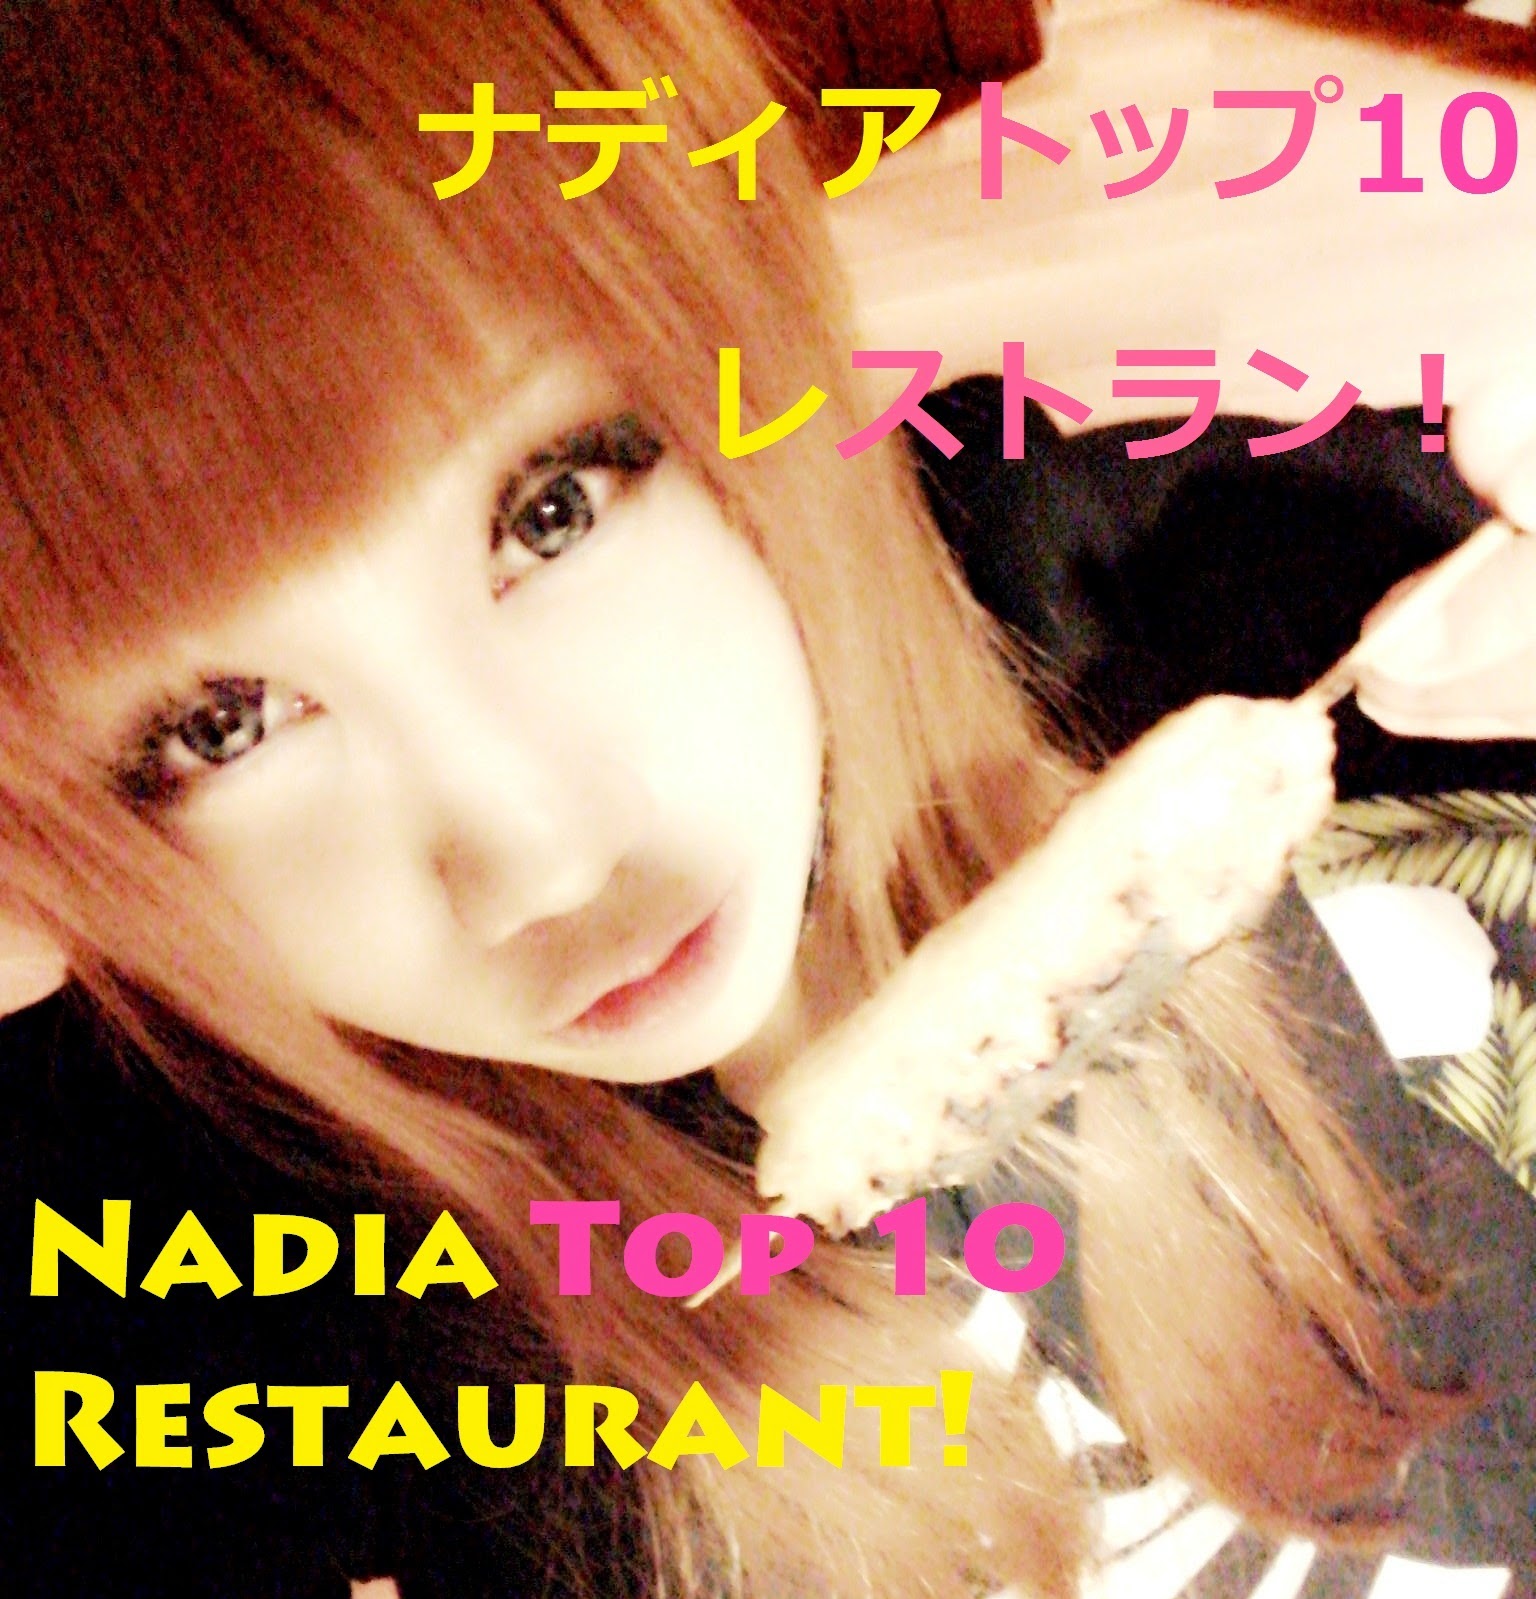 Nadia Top 10 Restaurant